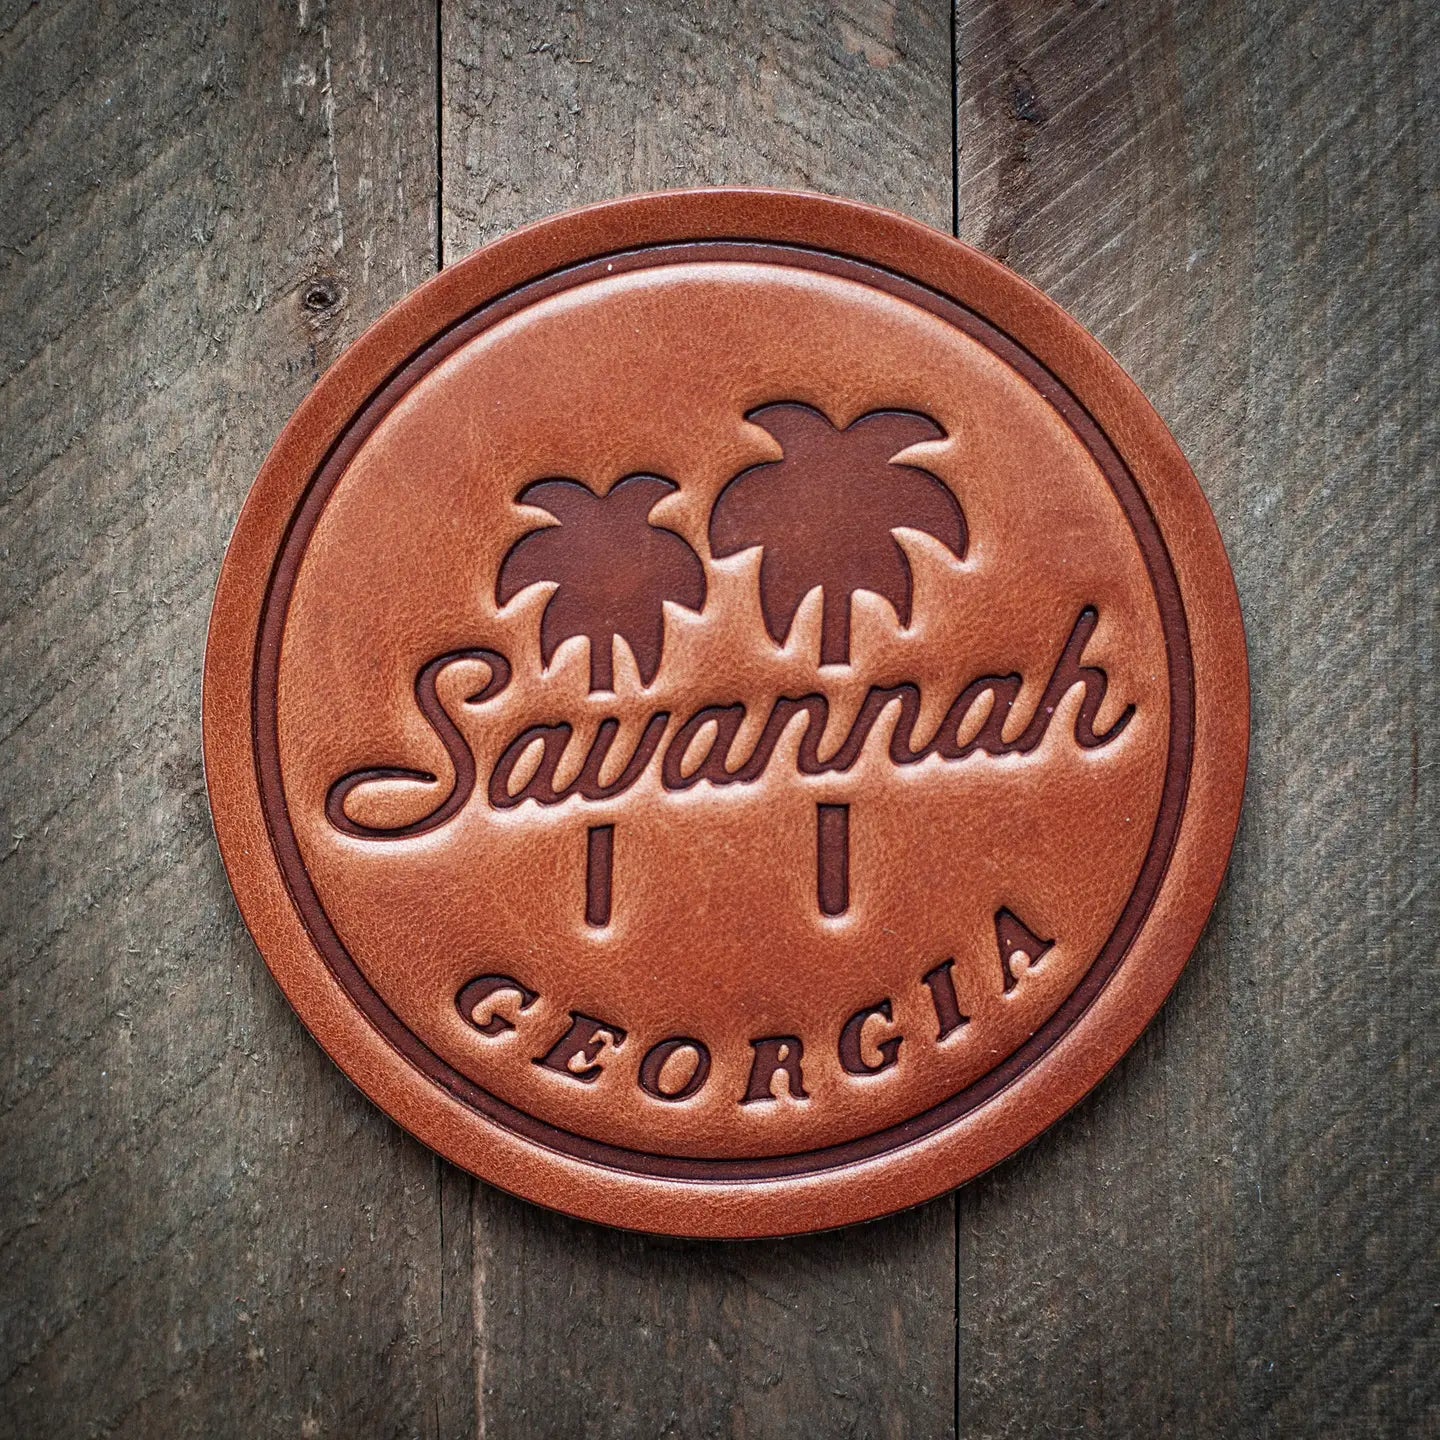 Savannah Georgia Leather Coaster